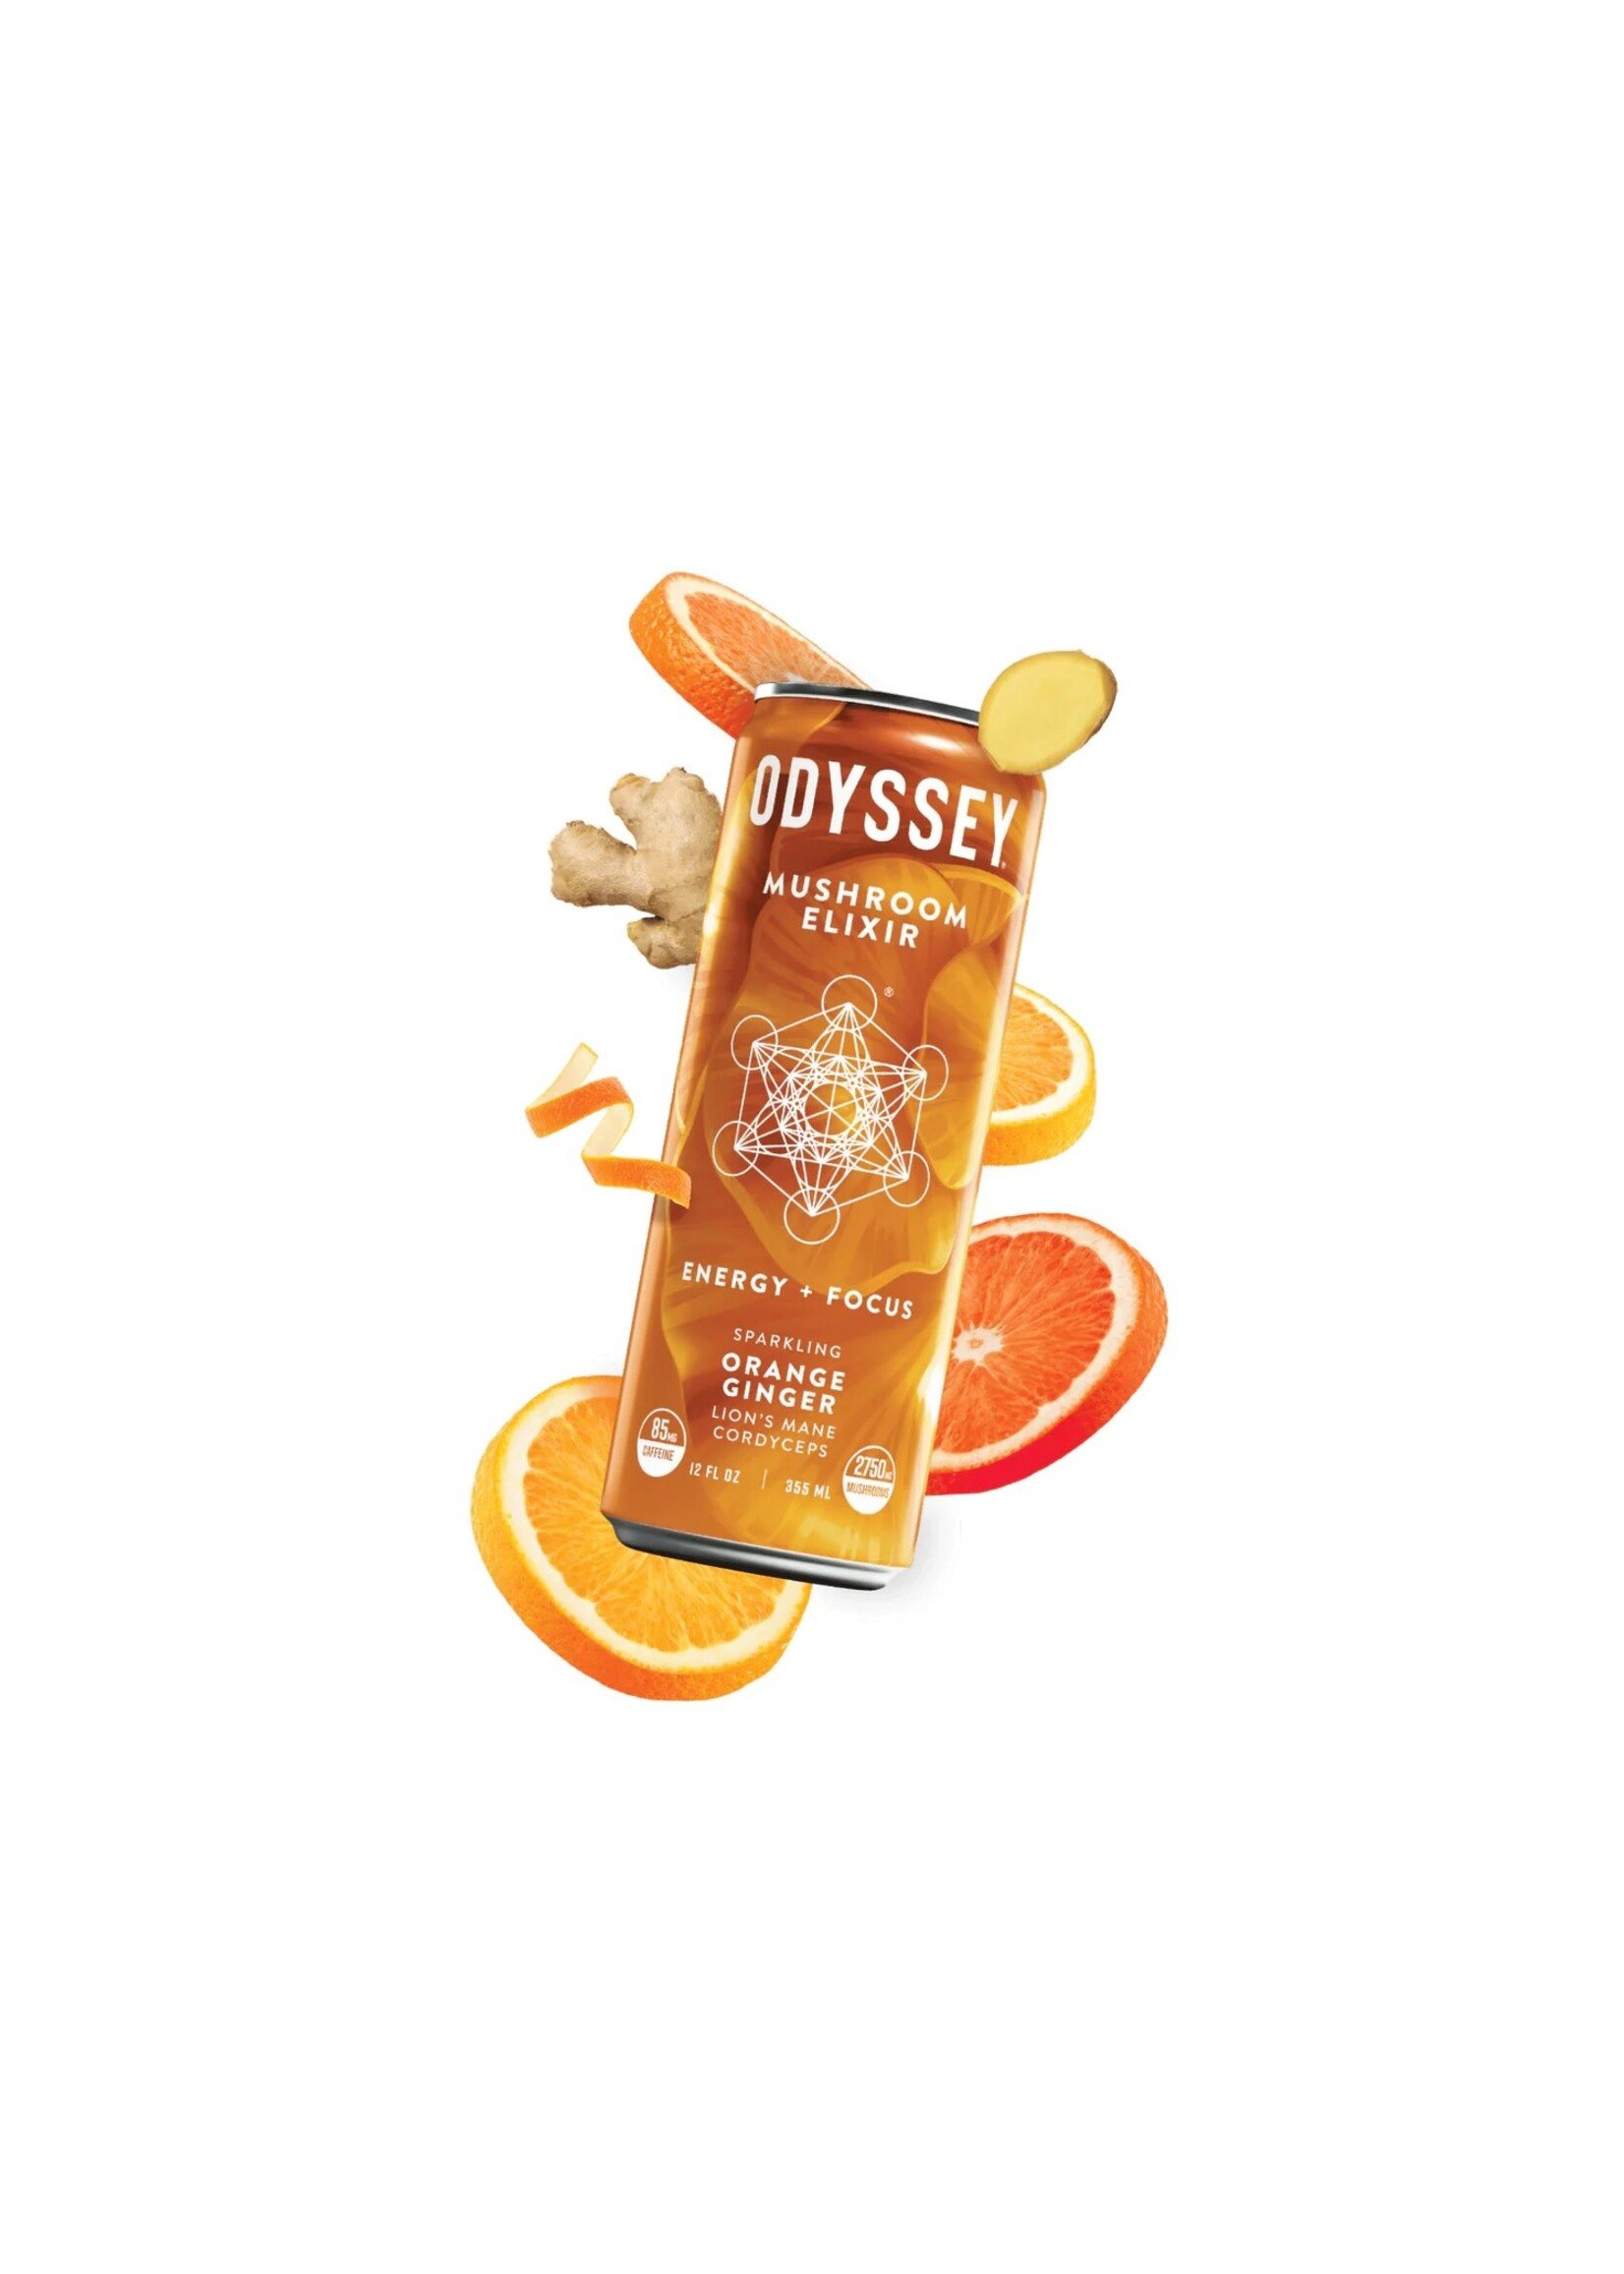 Odyssey Odyssey Mushroom Elixir Energy + Focus Drink 12oz